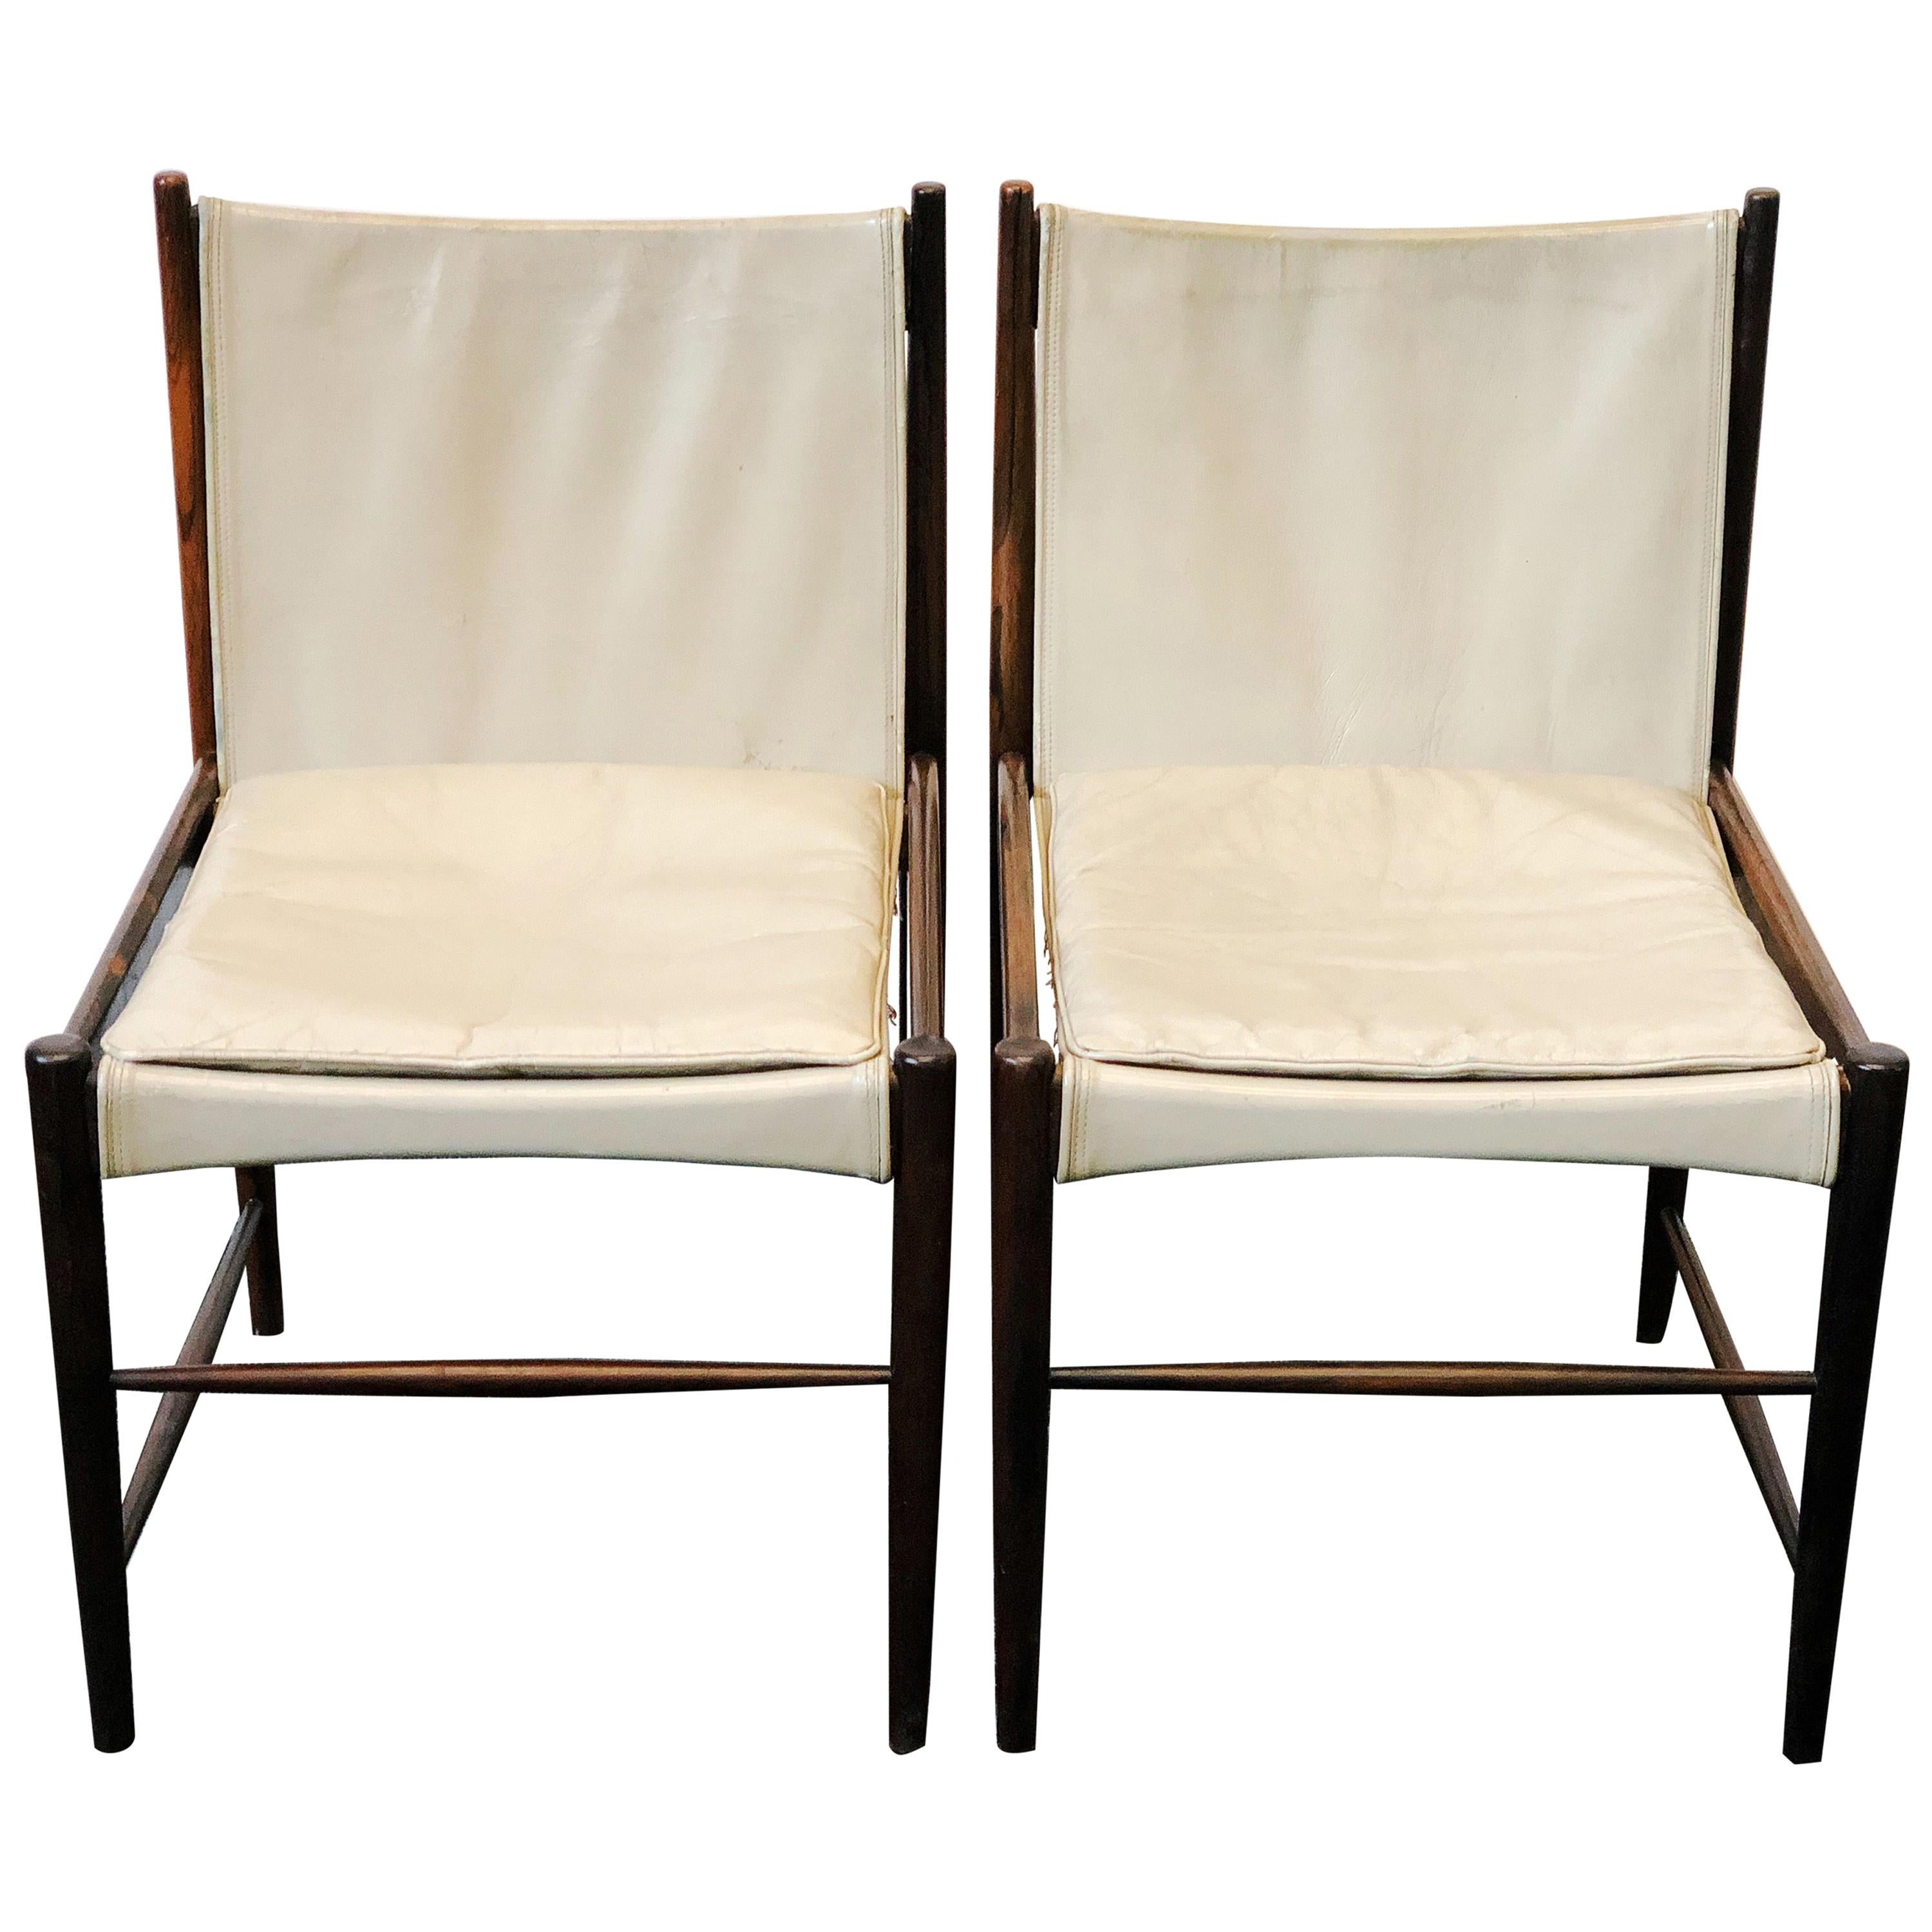 Vintage Pair of Jacaranda 'Cantu' Chairs by Sergio Rodrigues for OCA, Brazil 1958